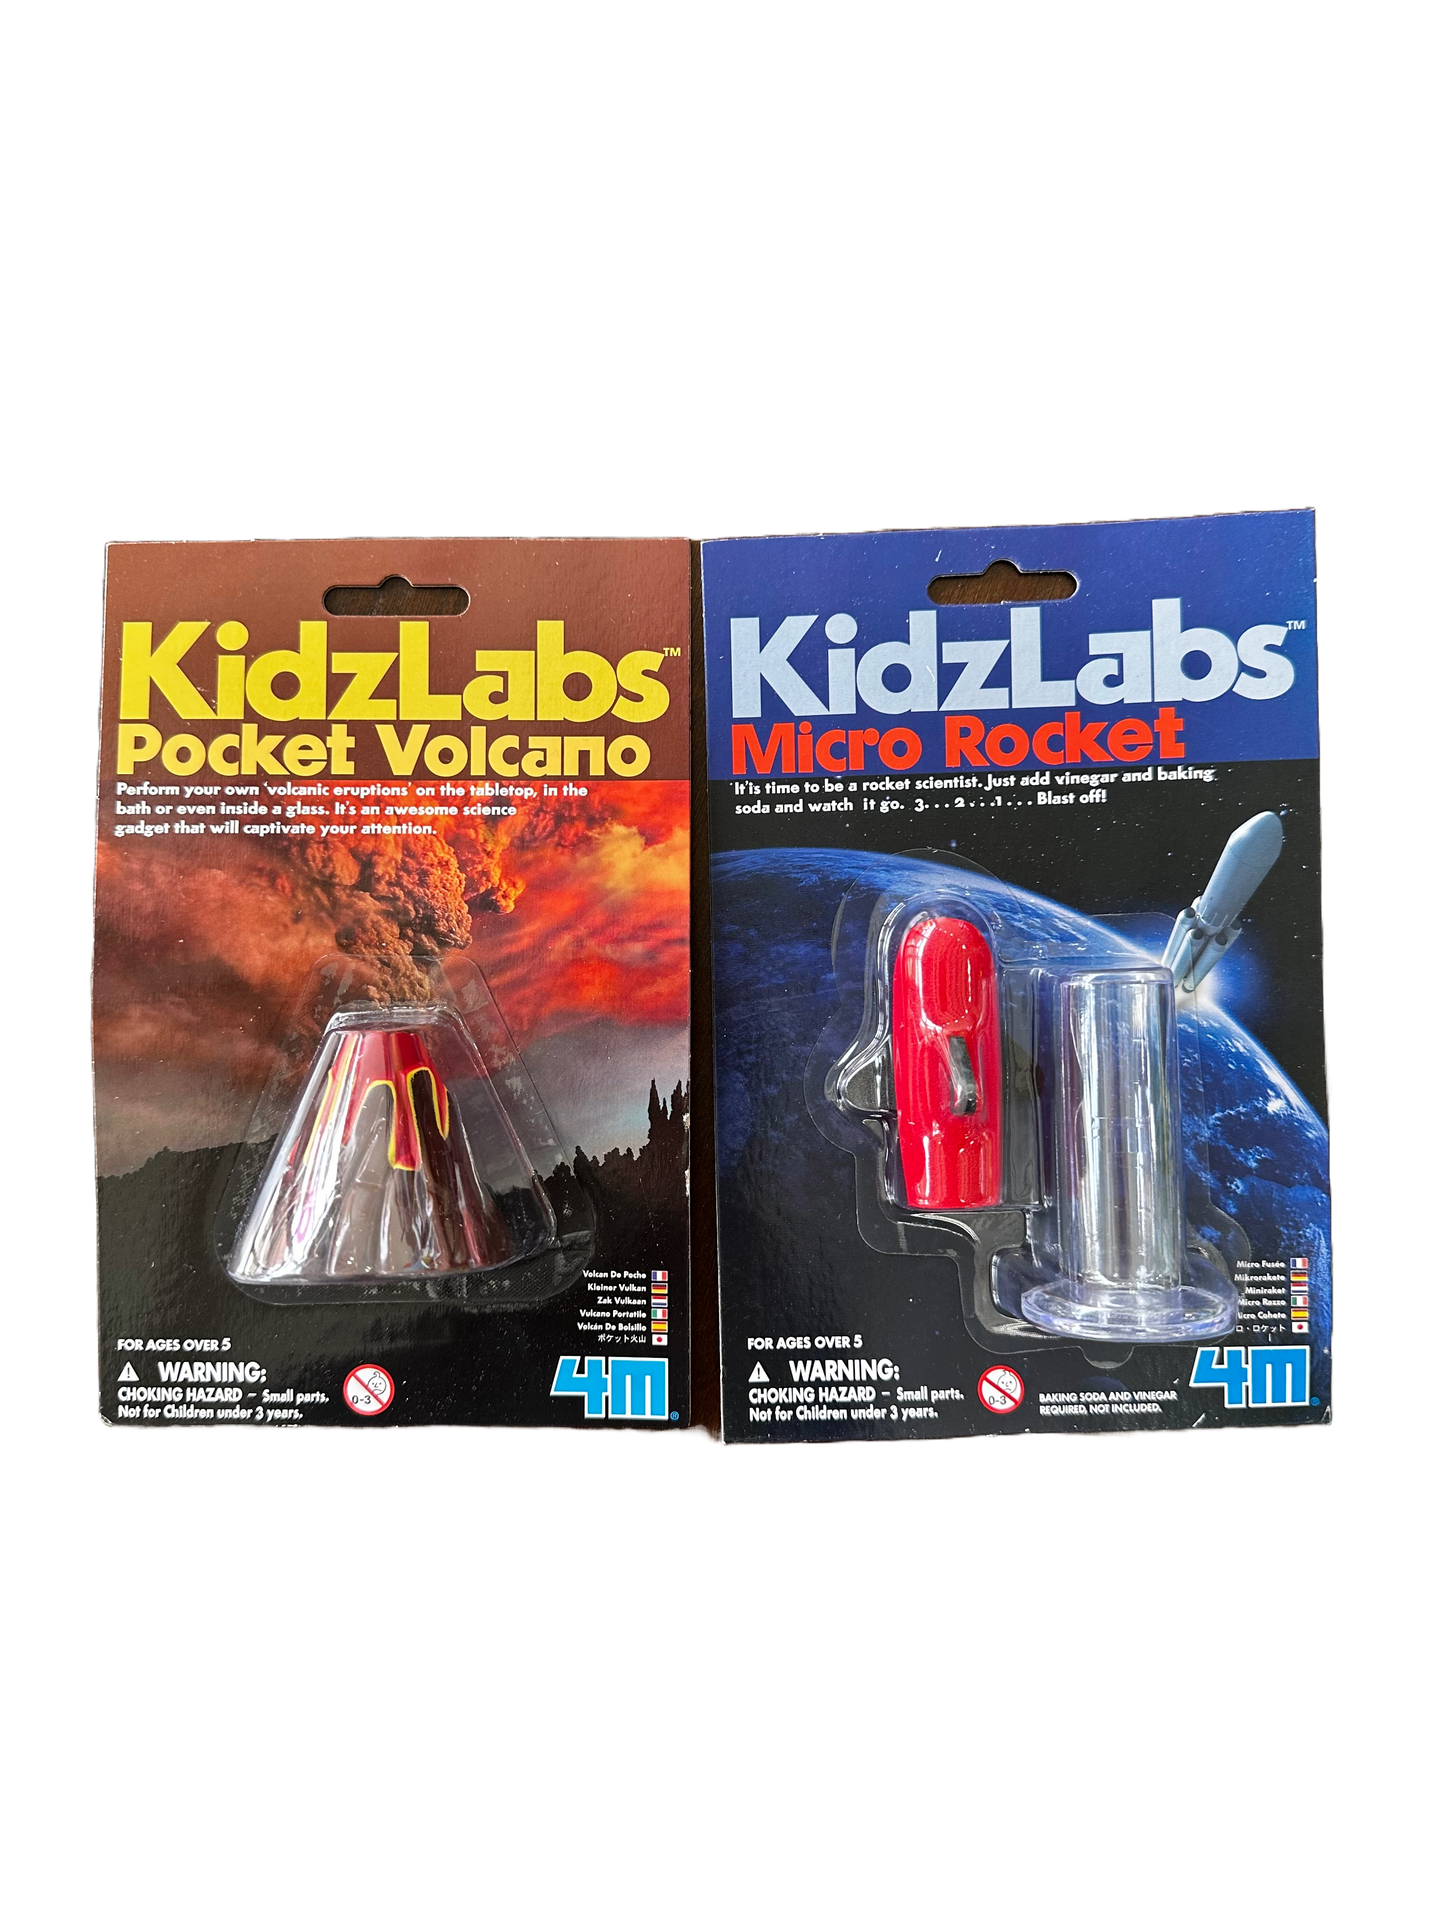 KidzLabs Pocket Volcano